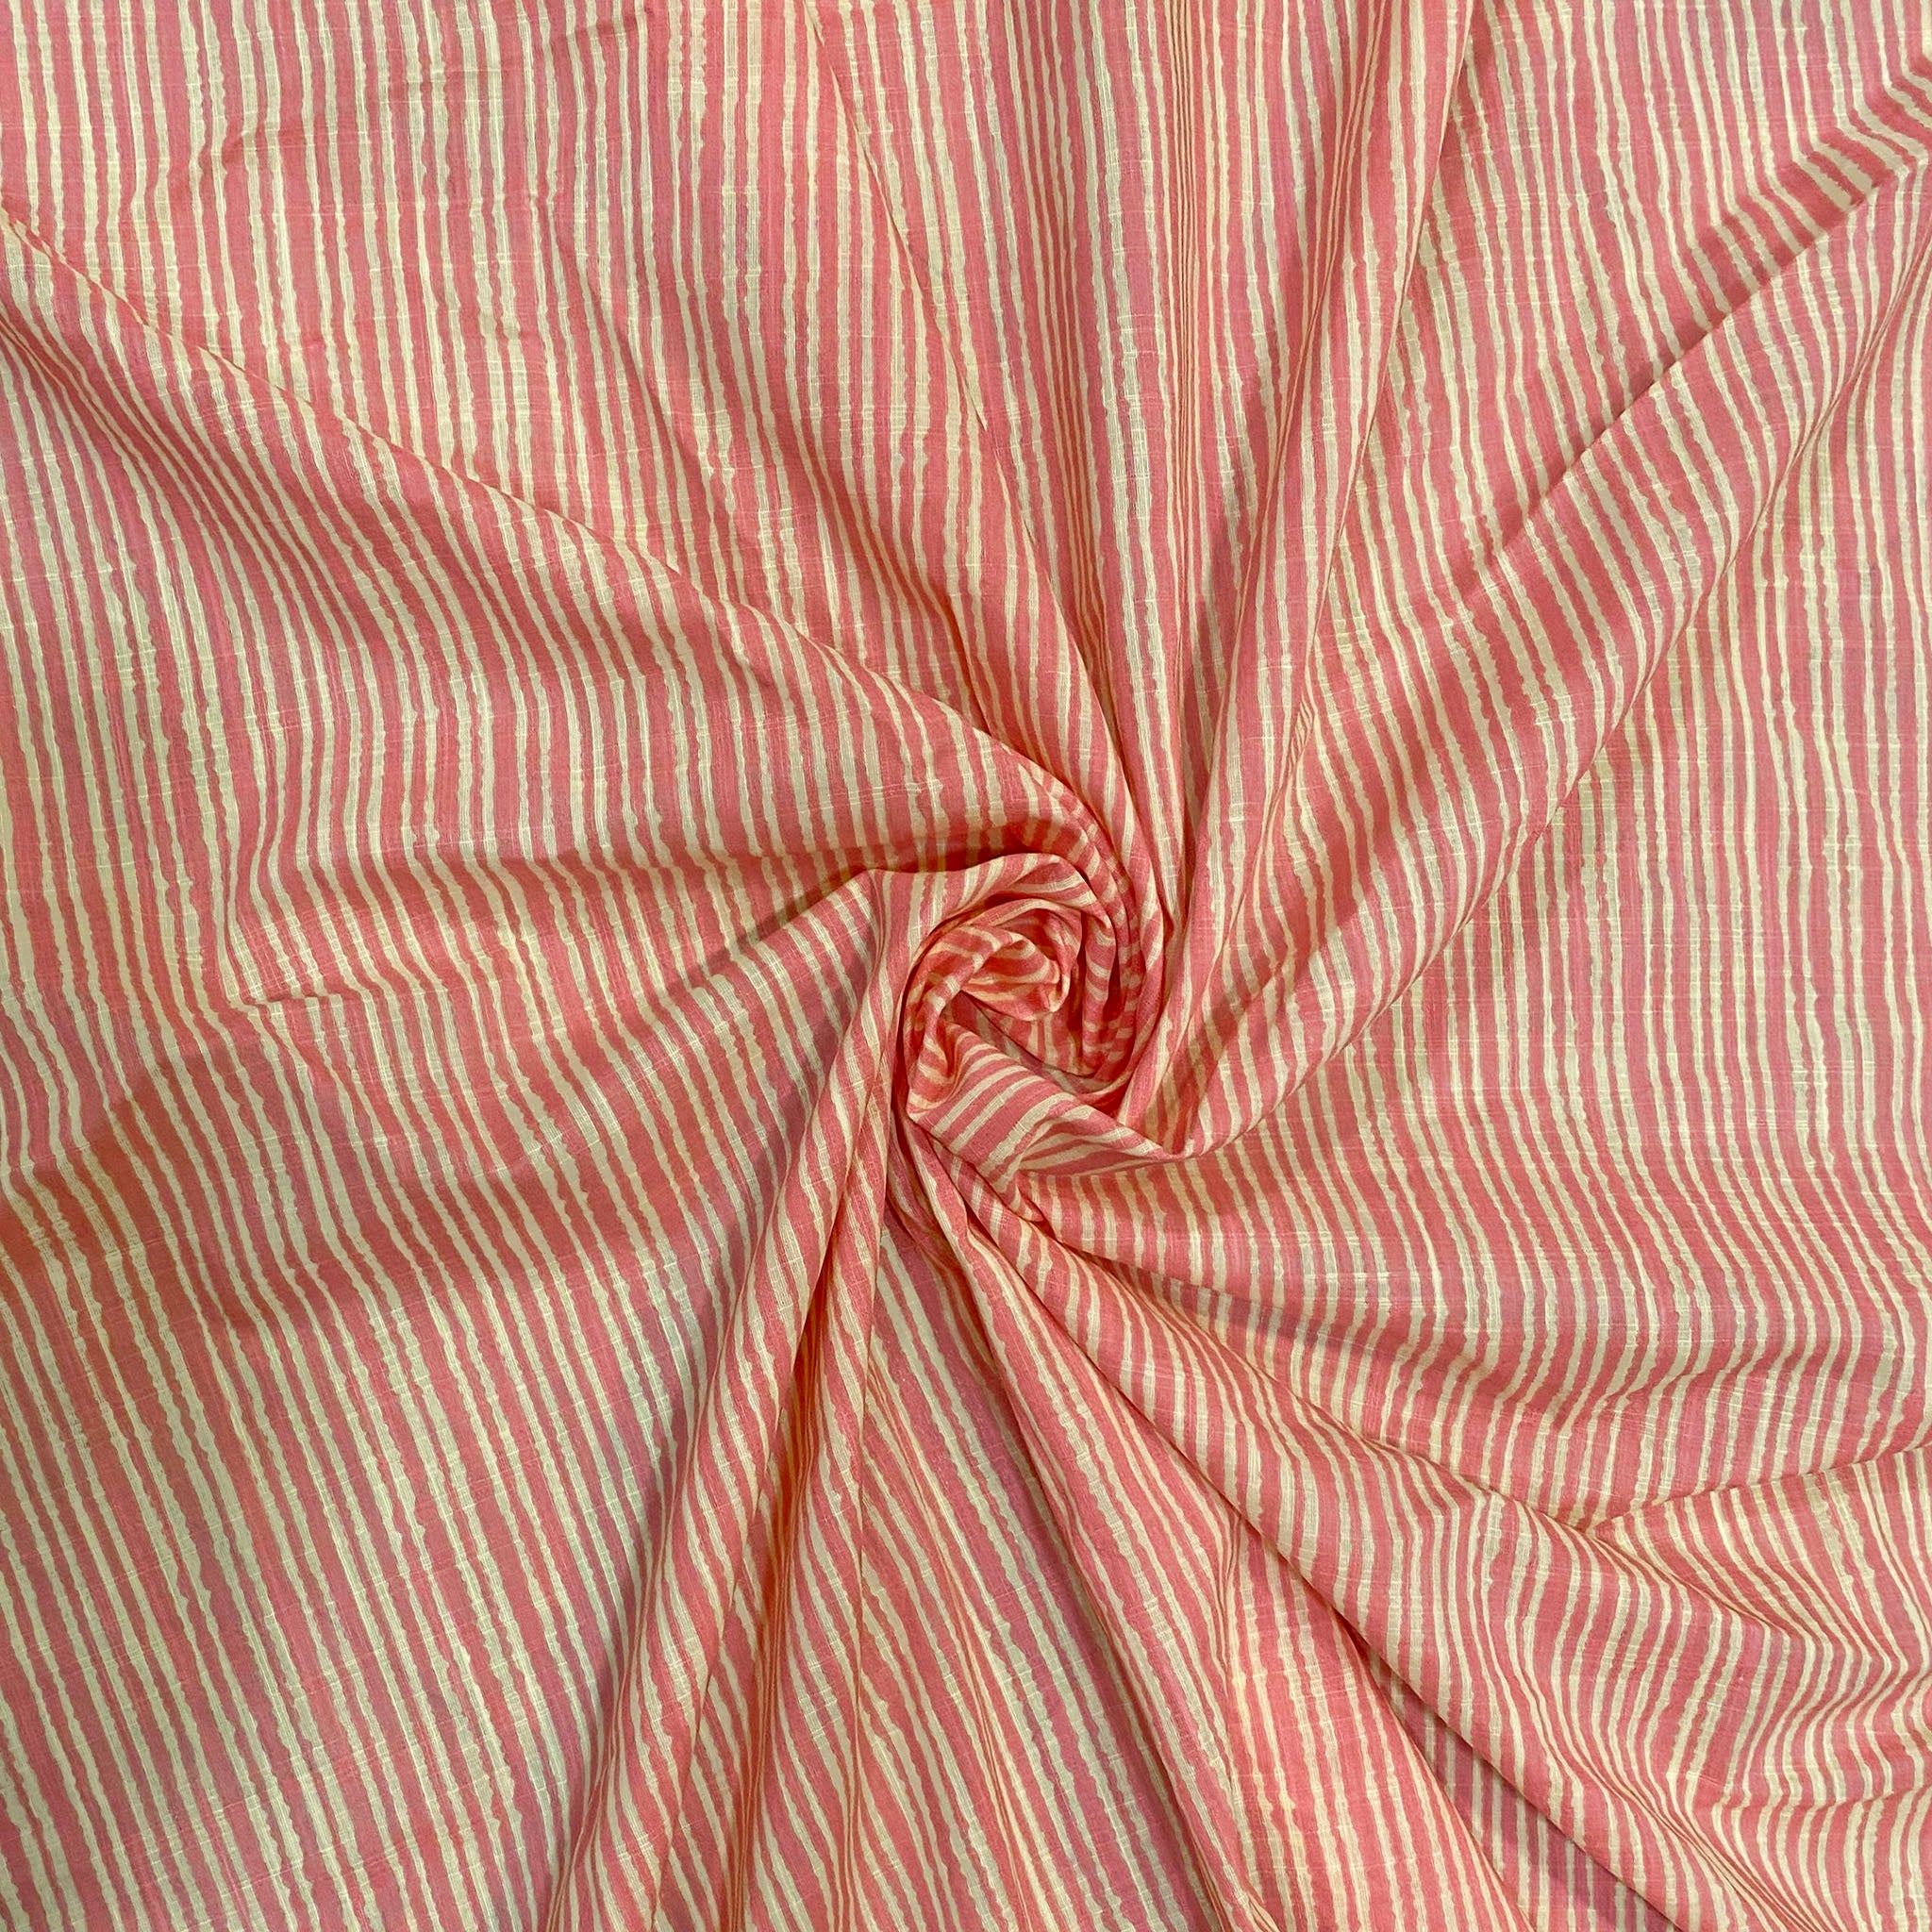 Orange Candy Striped Cotton Fabric